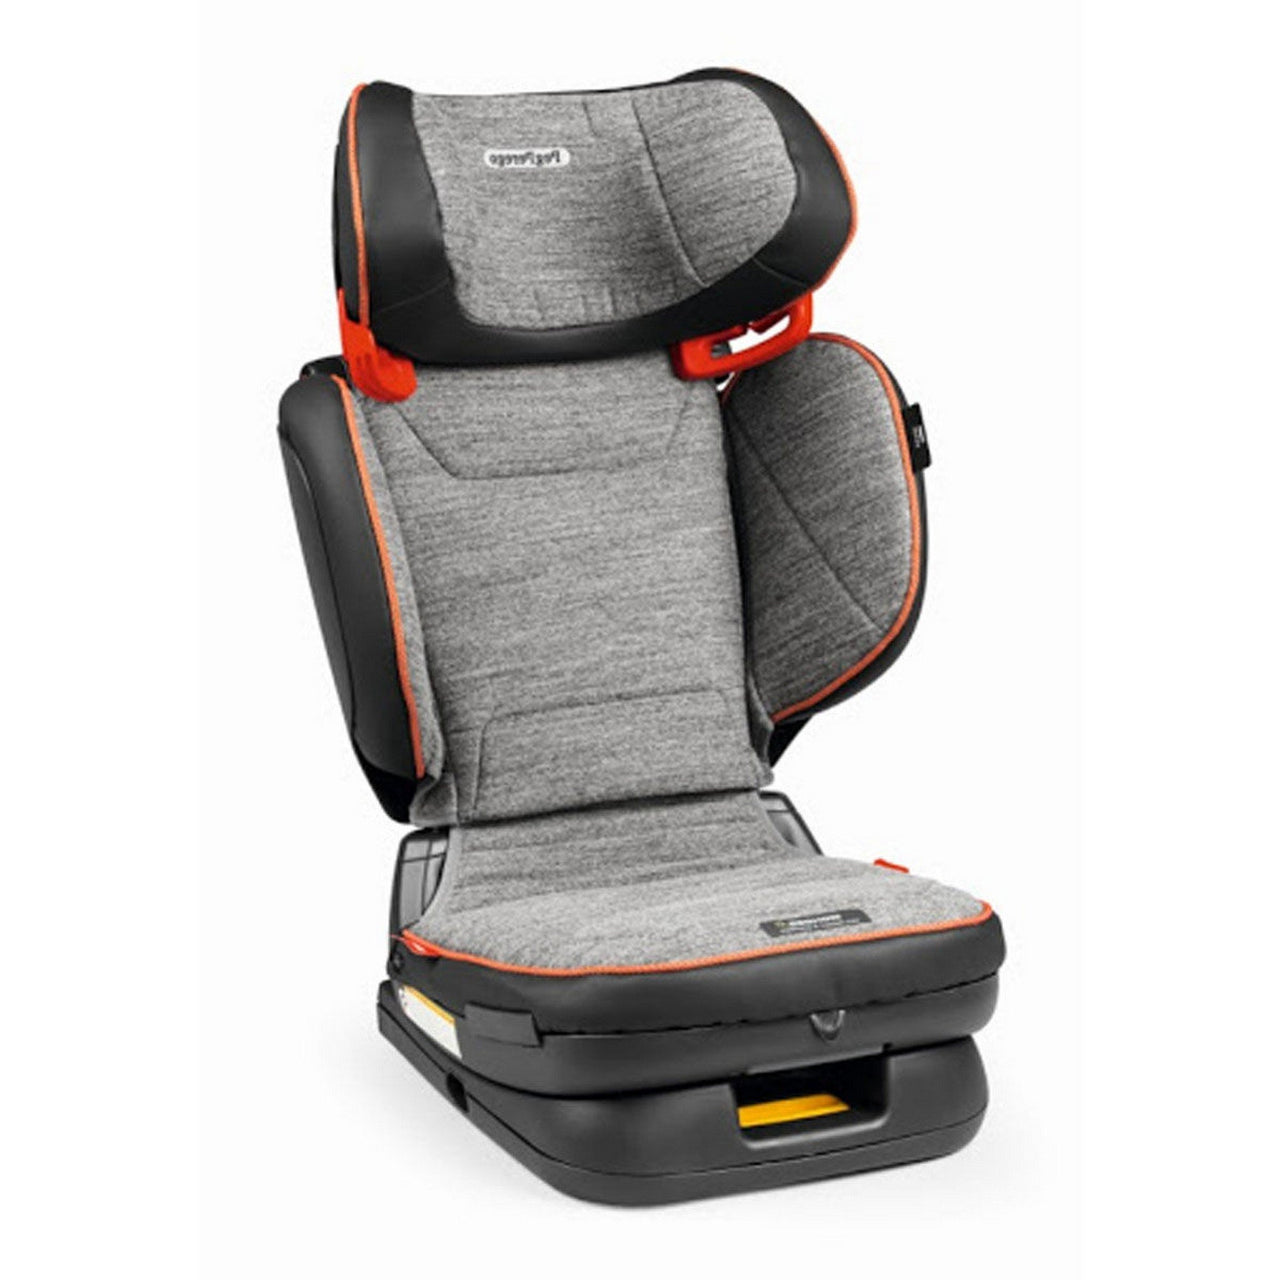  Peg Perego Viaggio Flex 120 - Booster Car Seat - for